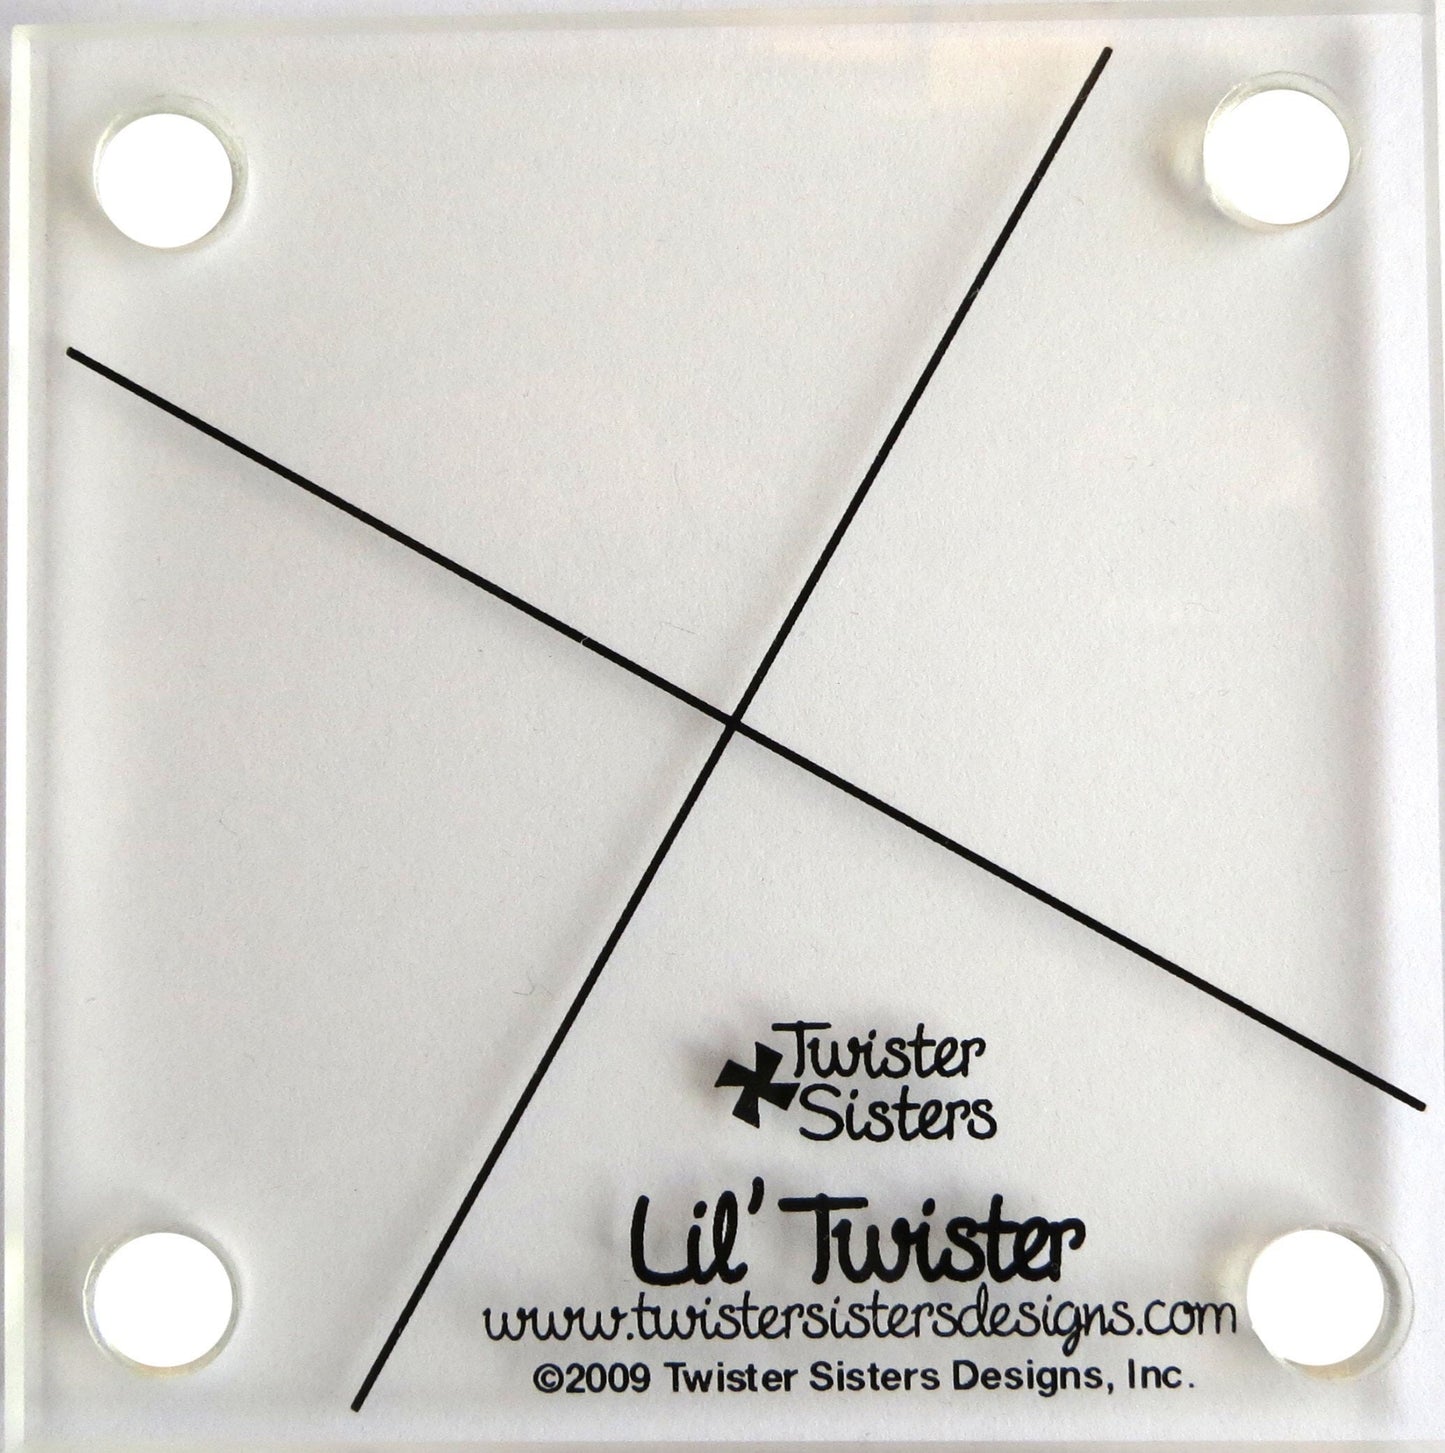 Lil’ Twister Pinwheel Ruler - Charm Pack Friendly - Twister Sisters